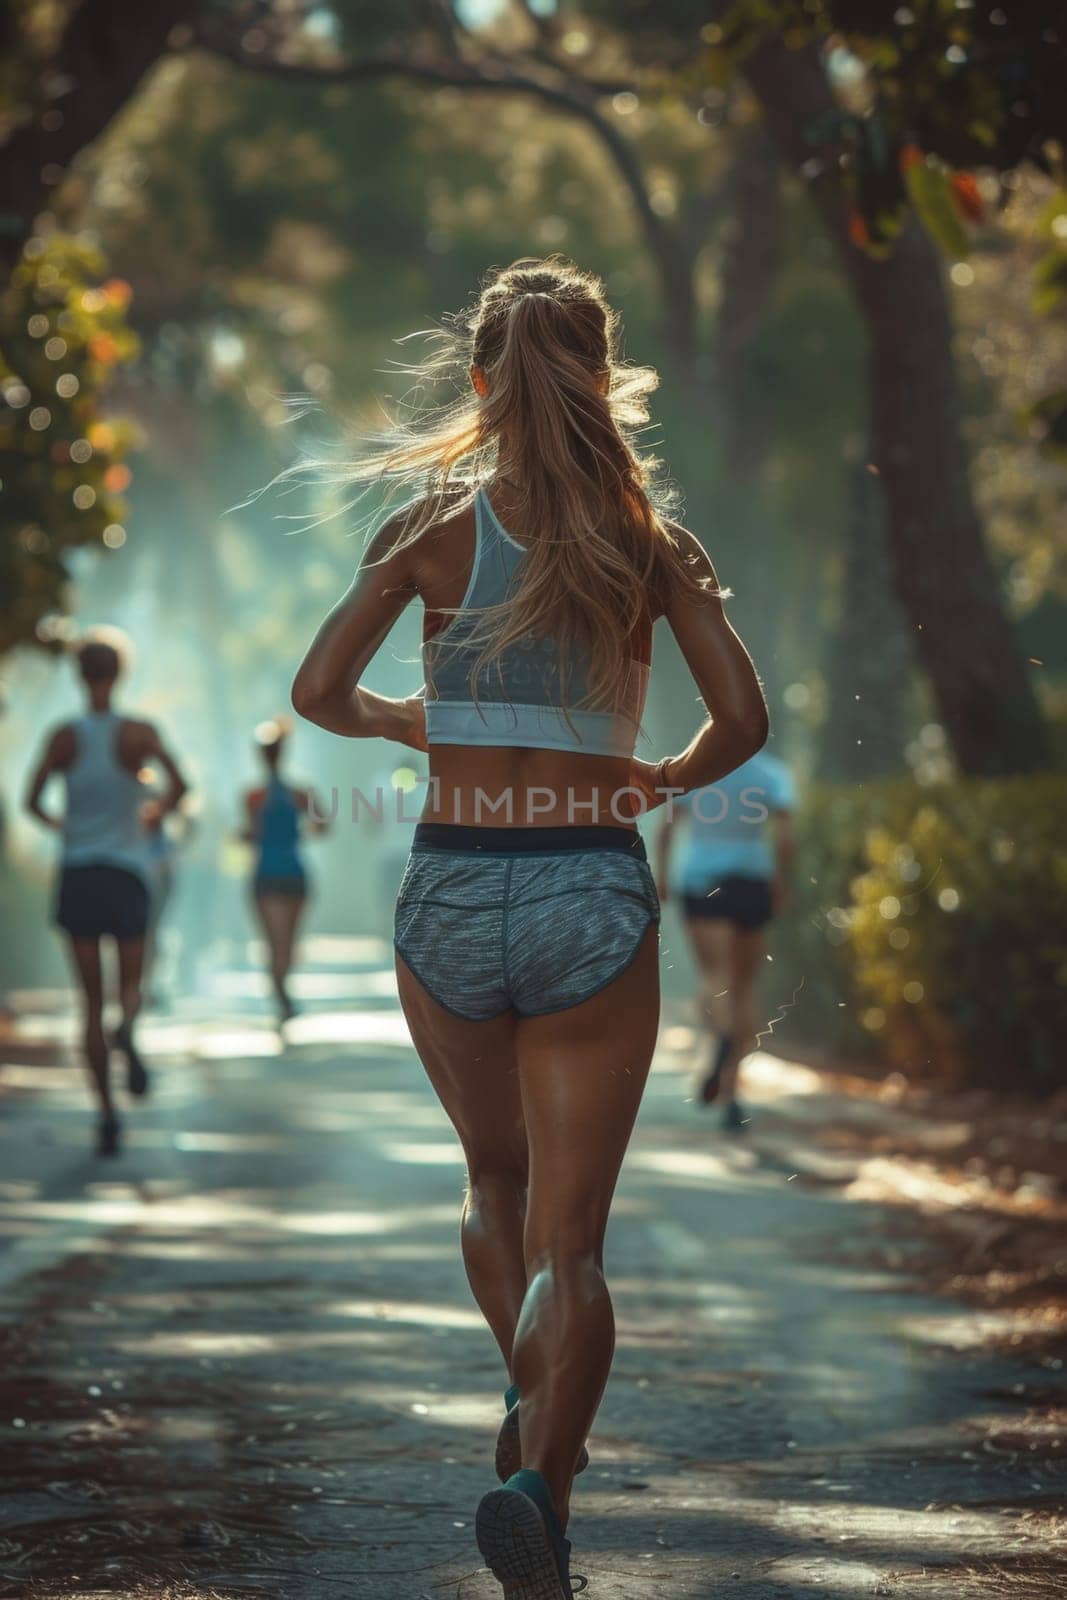 World Running Day. A girl runs in nature.